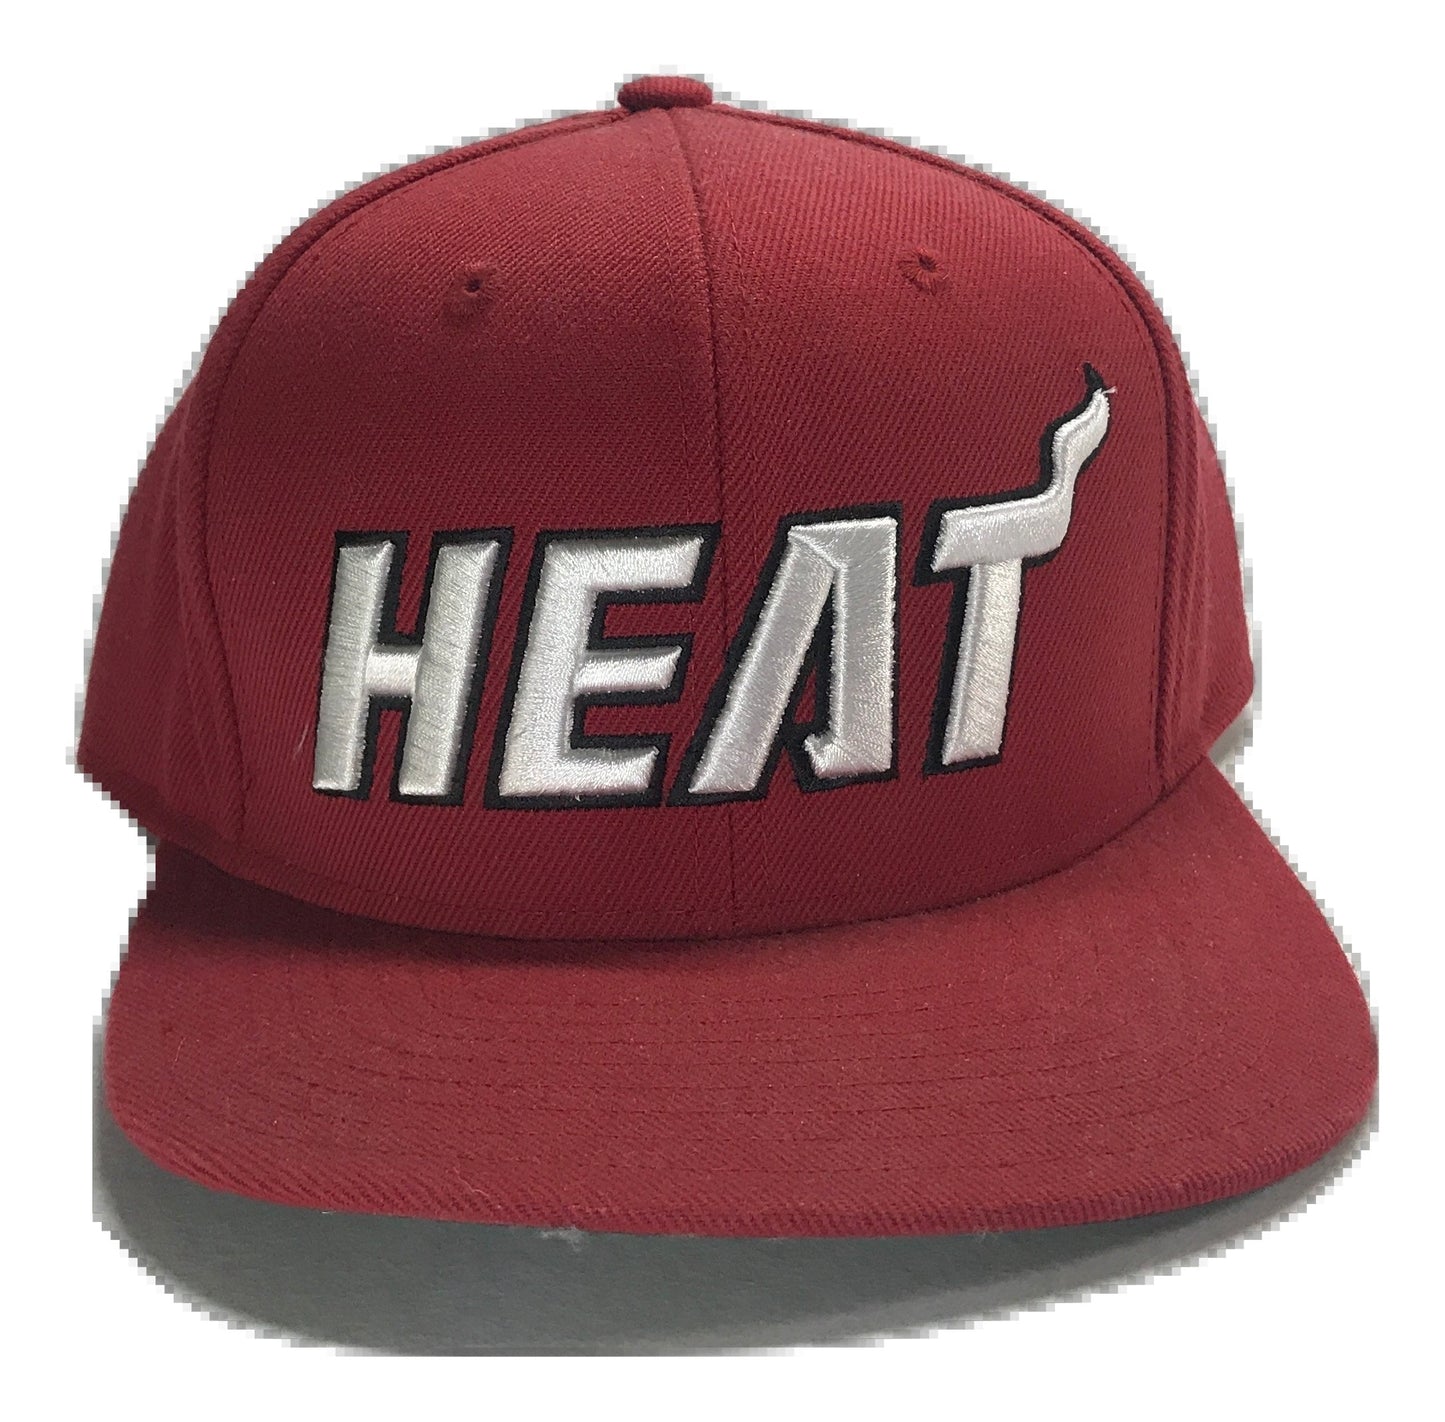 Miami Heat (Red) Snapback